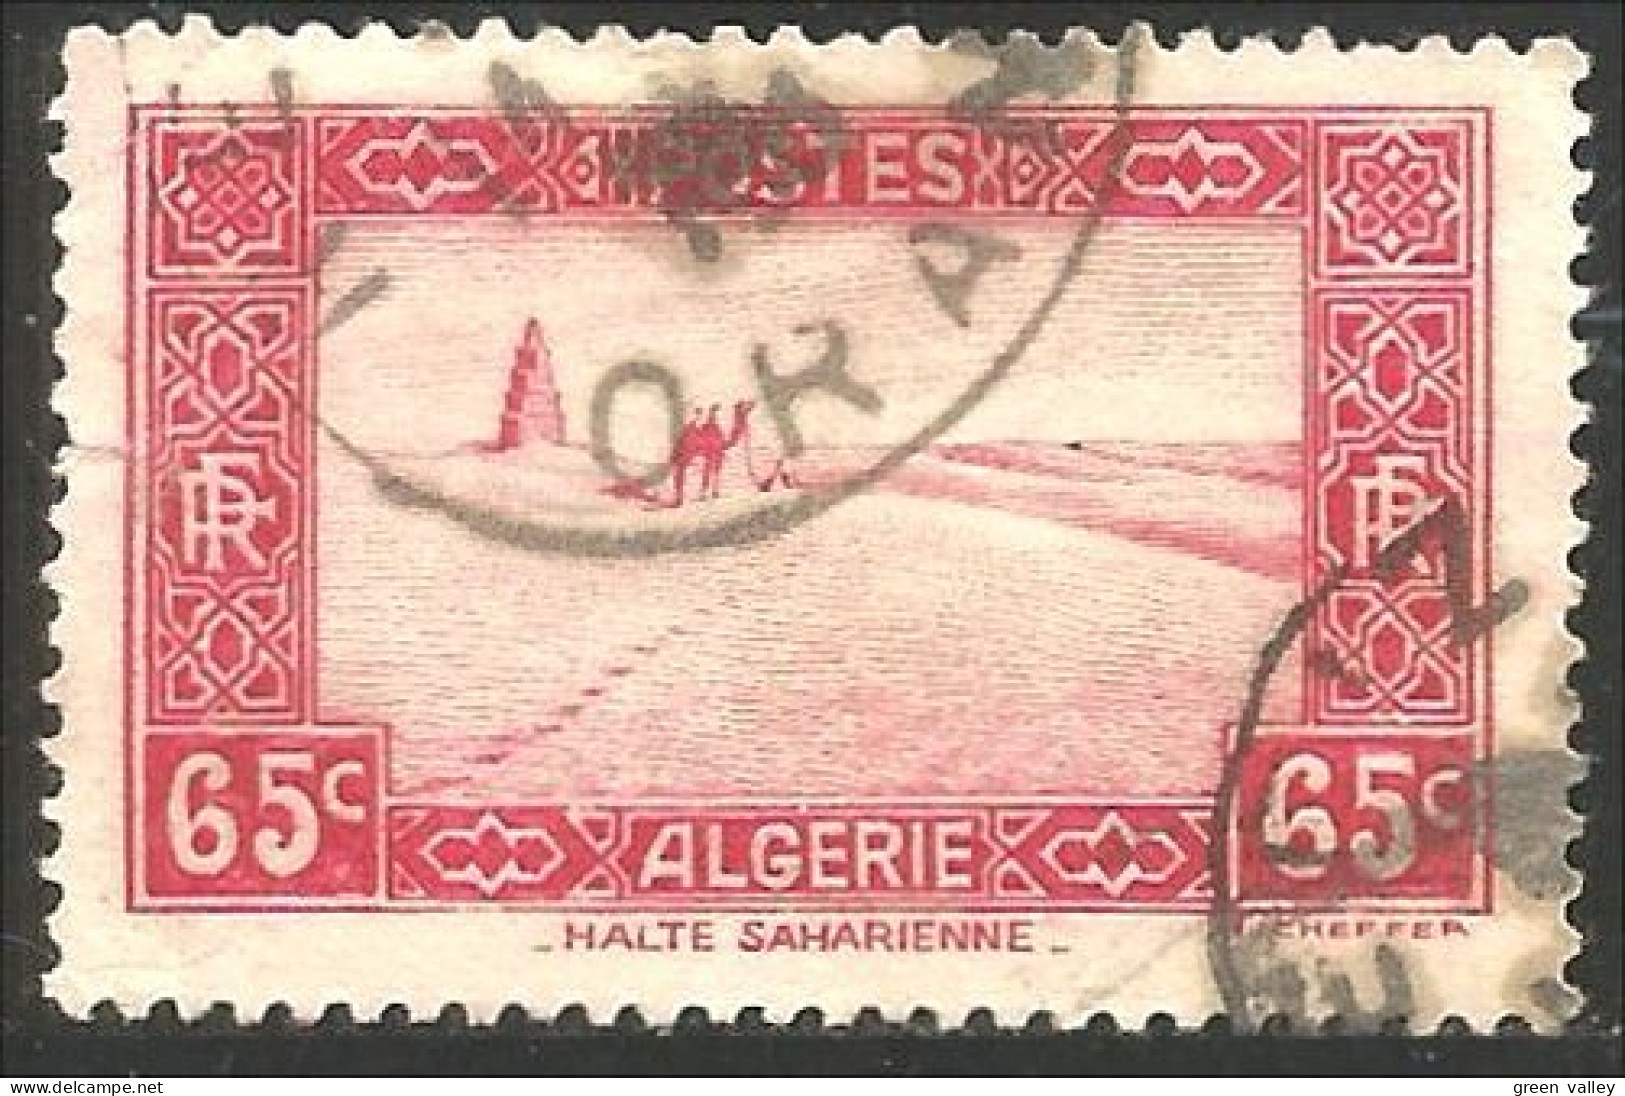 124 Algerie 65c Halte Saharienne Desert Sahara (ALG-181) - Gebruikt